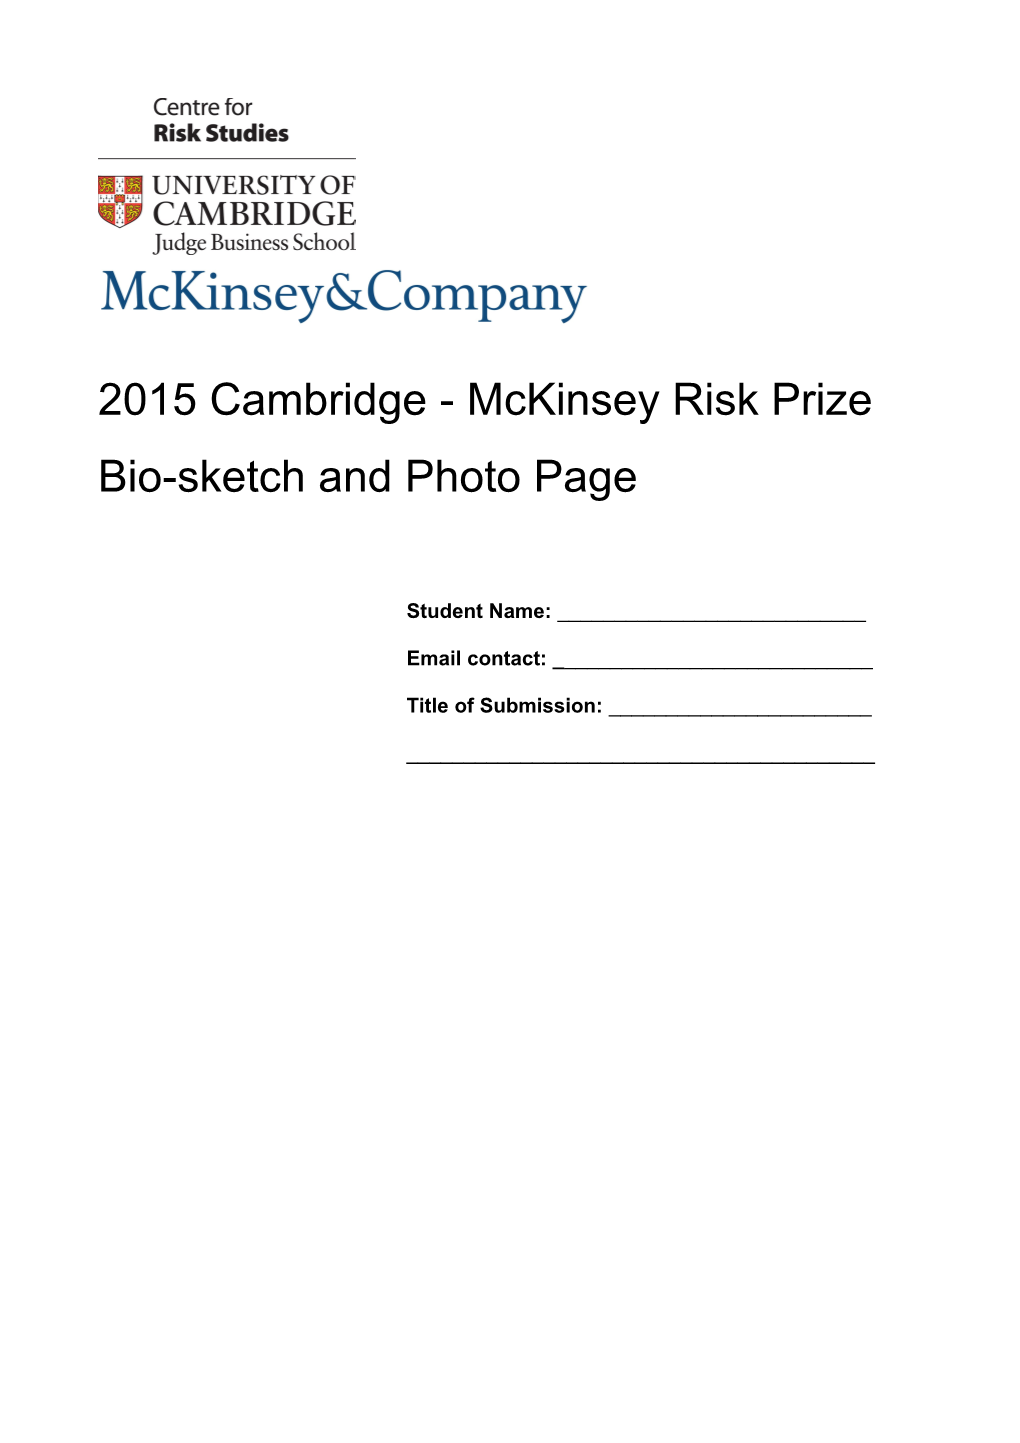 2015 Cambridge - Mckinsey Risk Prize Bio-Sketch and Photo Page